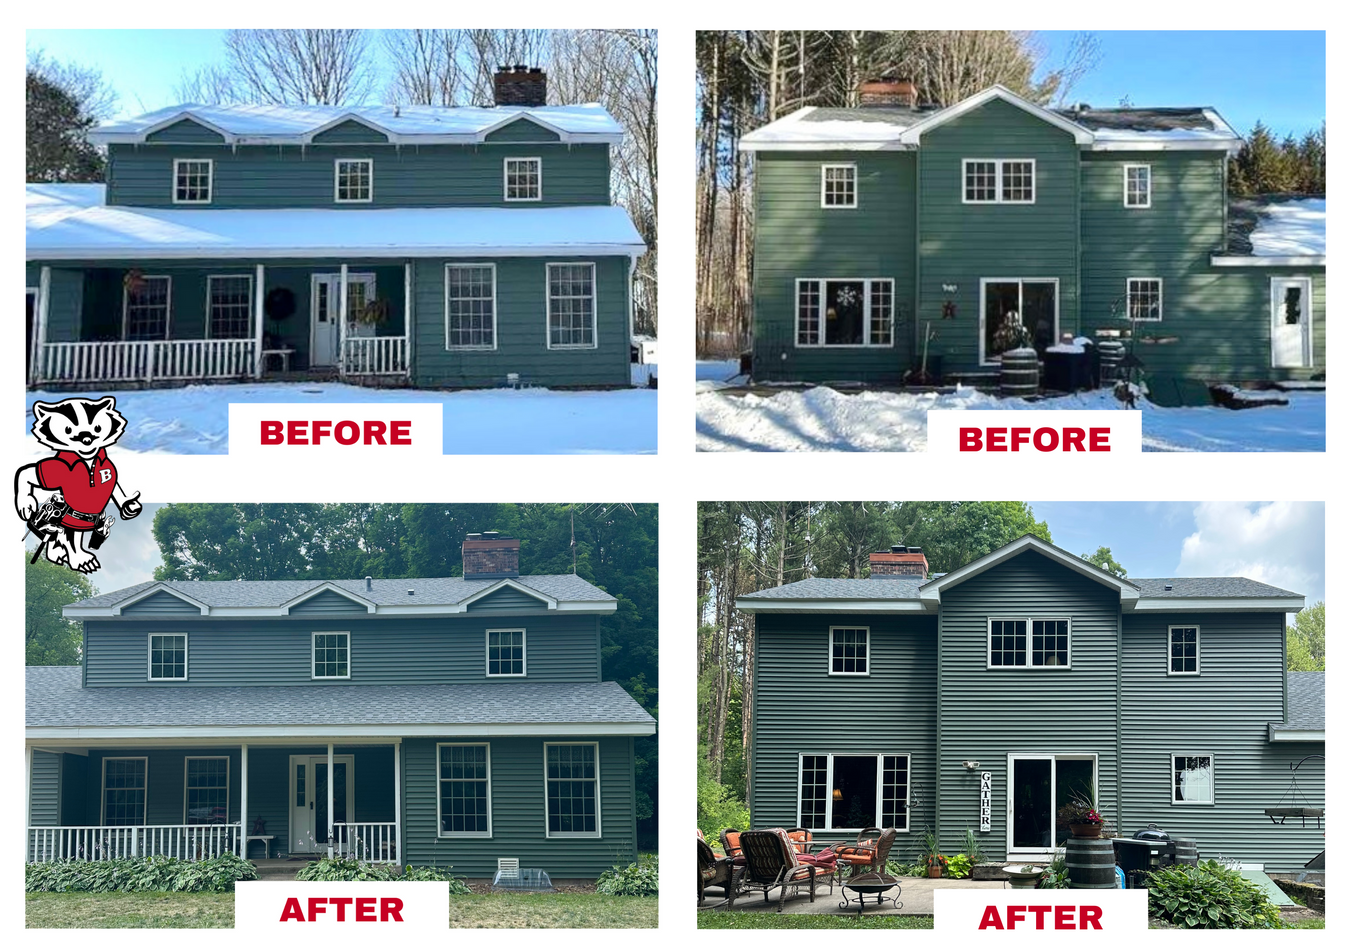 Full Home Exterior Restoration, GAF Shingles, Cedar knolls designer collection Myrtle, soffit, fascia, window installation, before and after